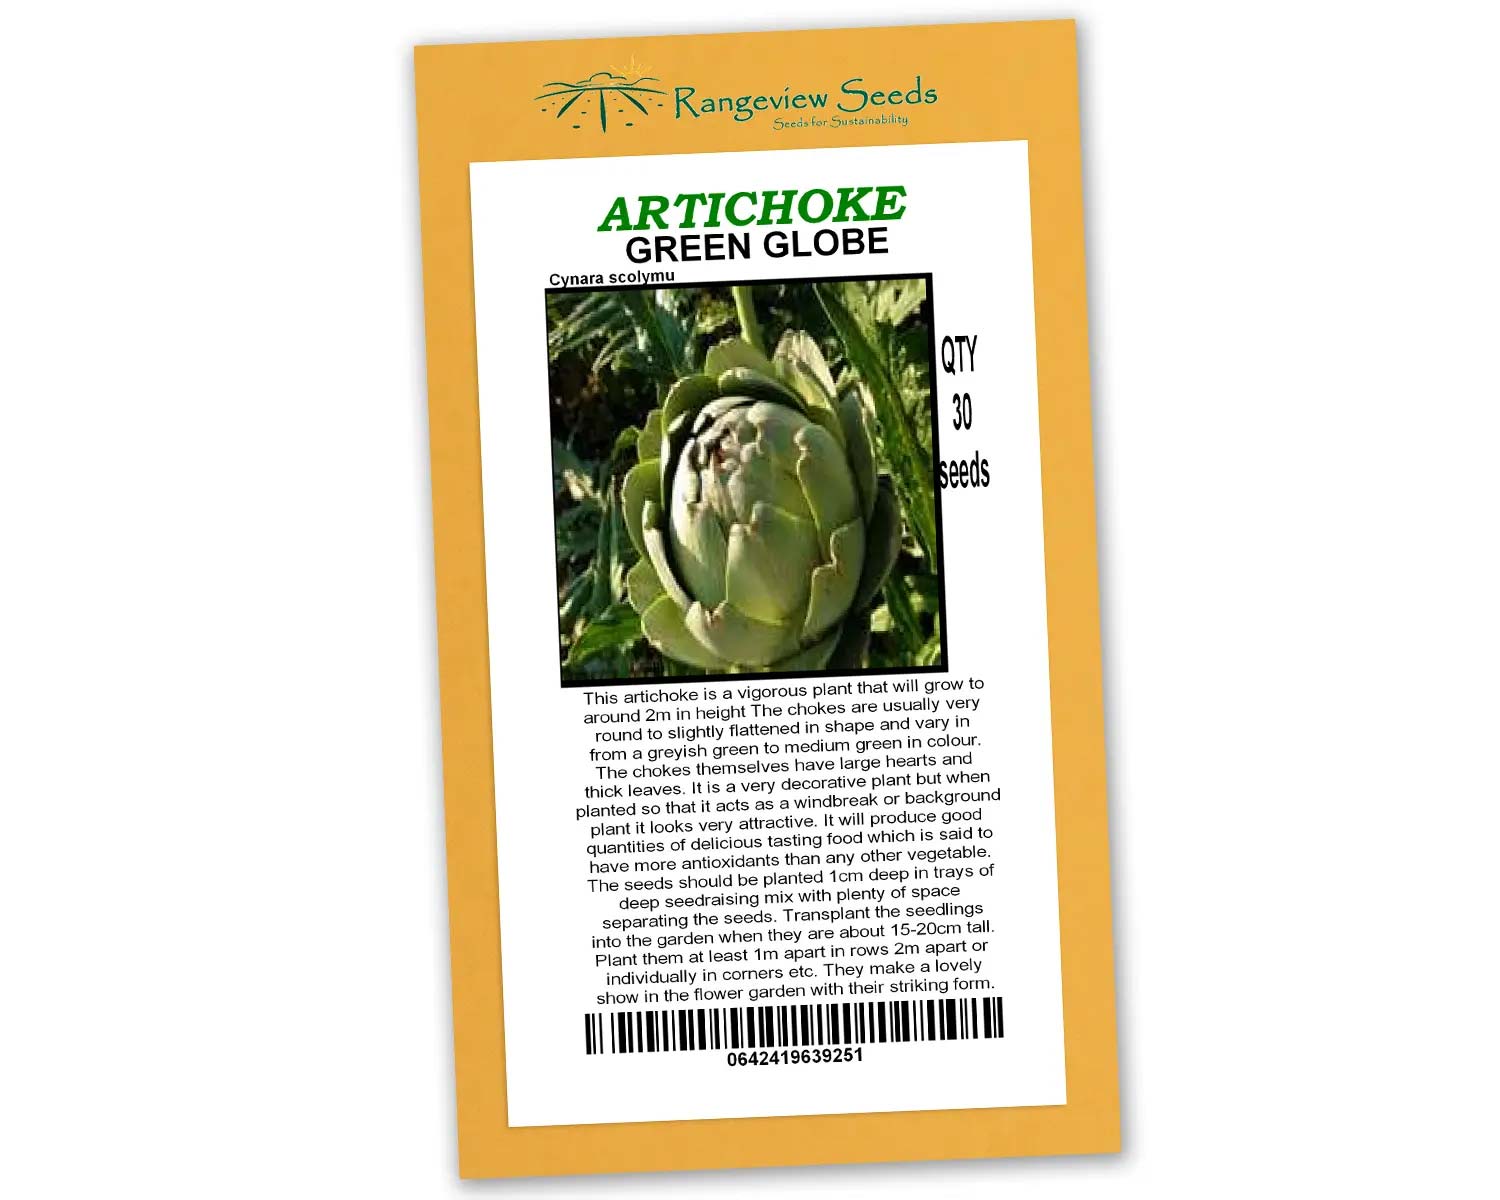 Artichoke Green Globe - Rangeview Seeds